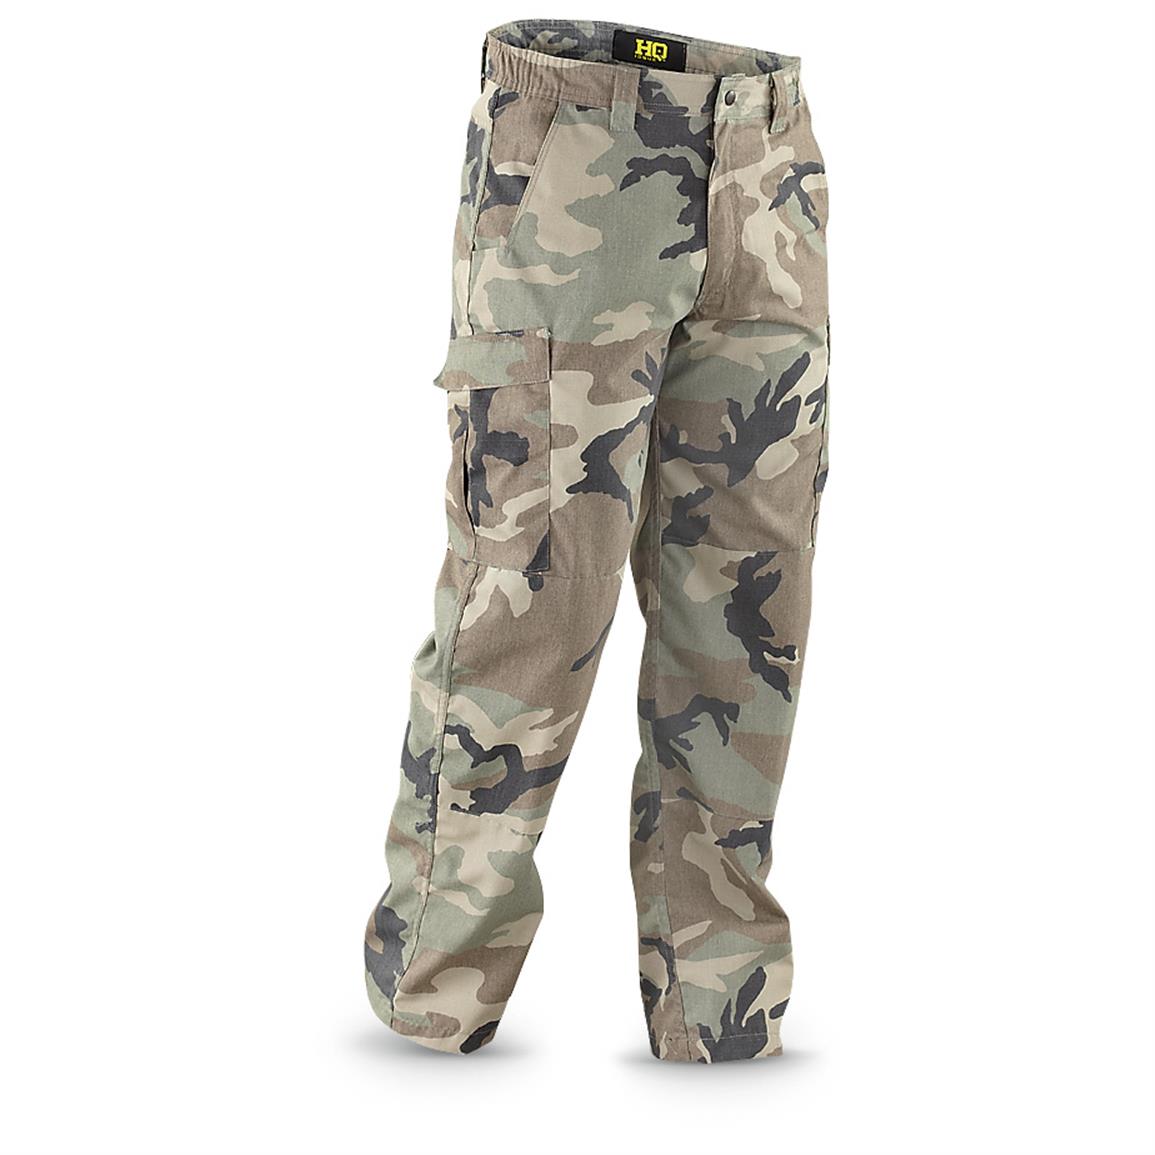 Army Pants: How to Wear Them Unthreateningly – careyfashion.com